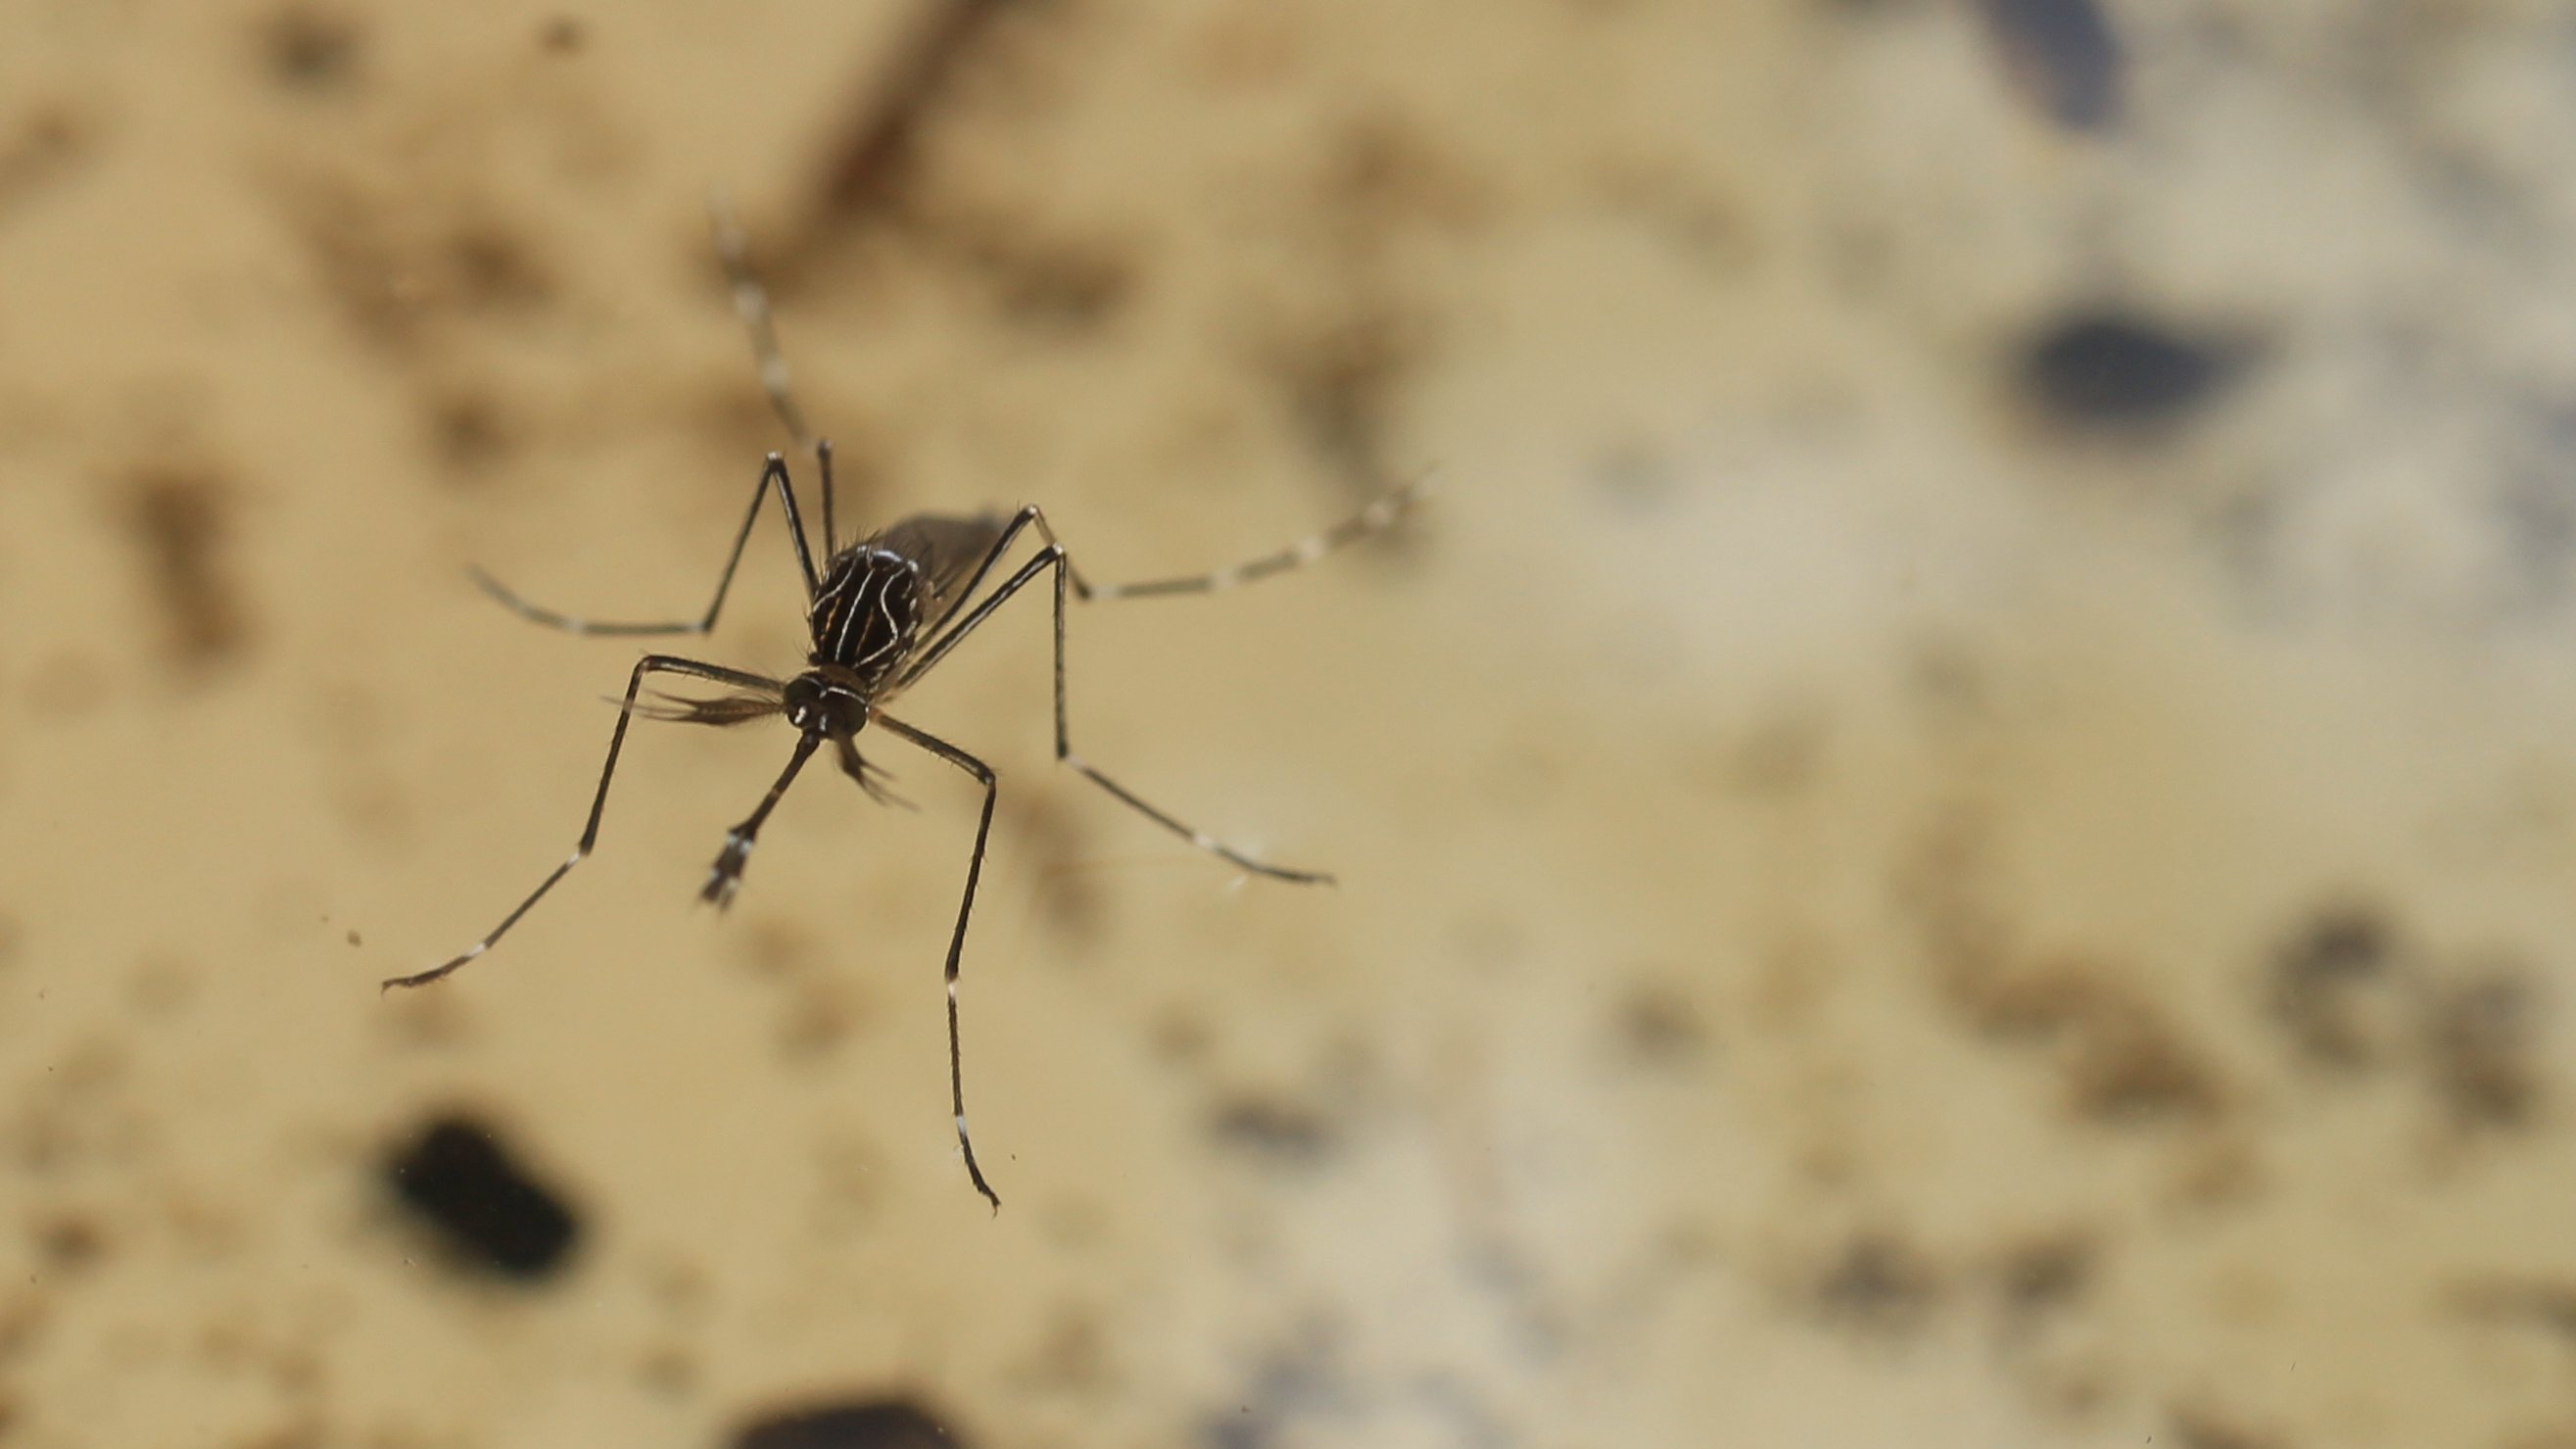 Japanese encephalitis: Health warnings issued for mosquito-borne disease  after virus detected